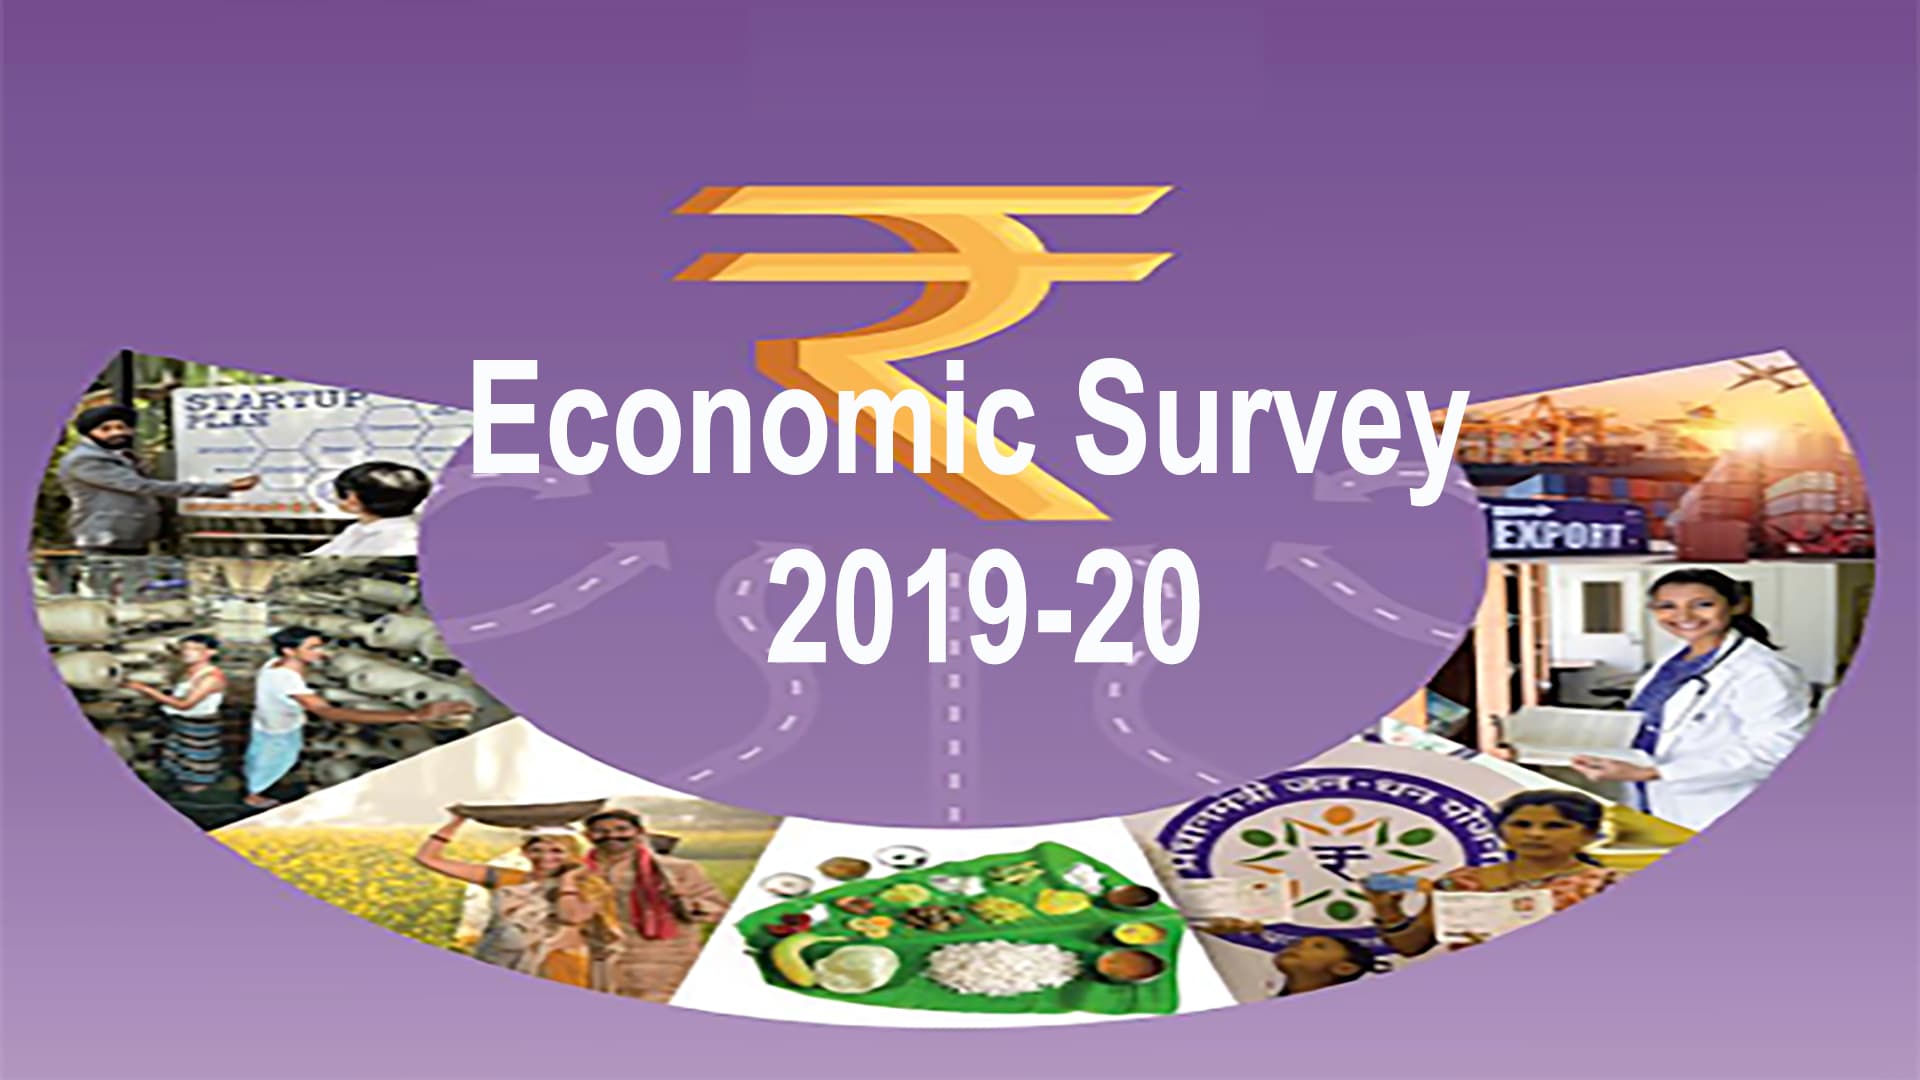 Highlights of Economic Survey 2019-20